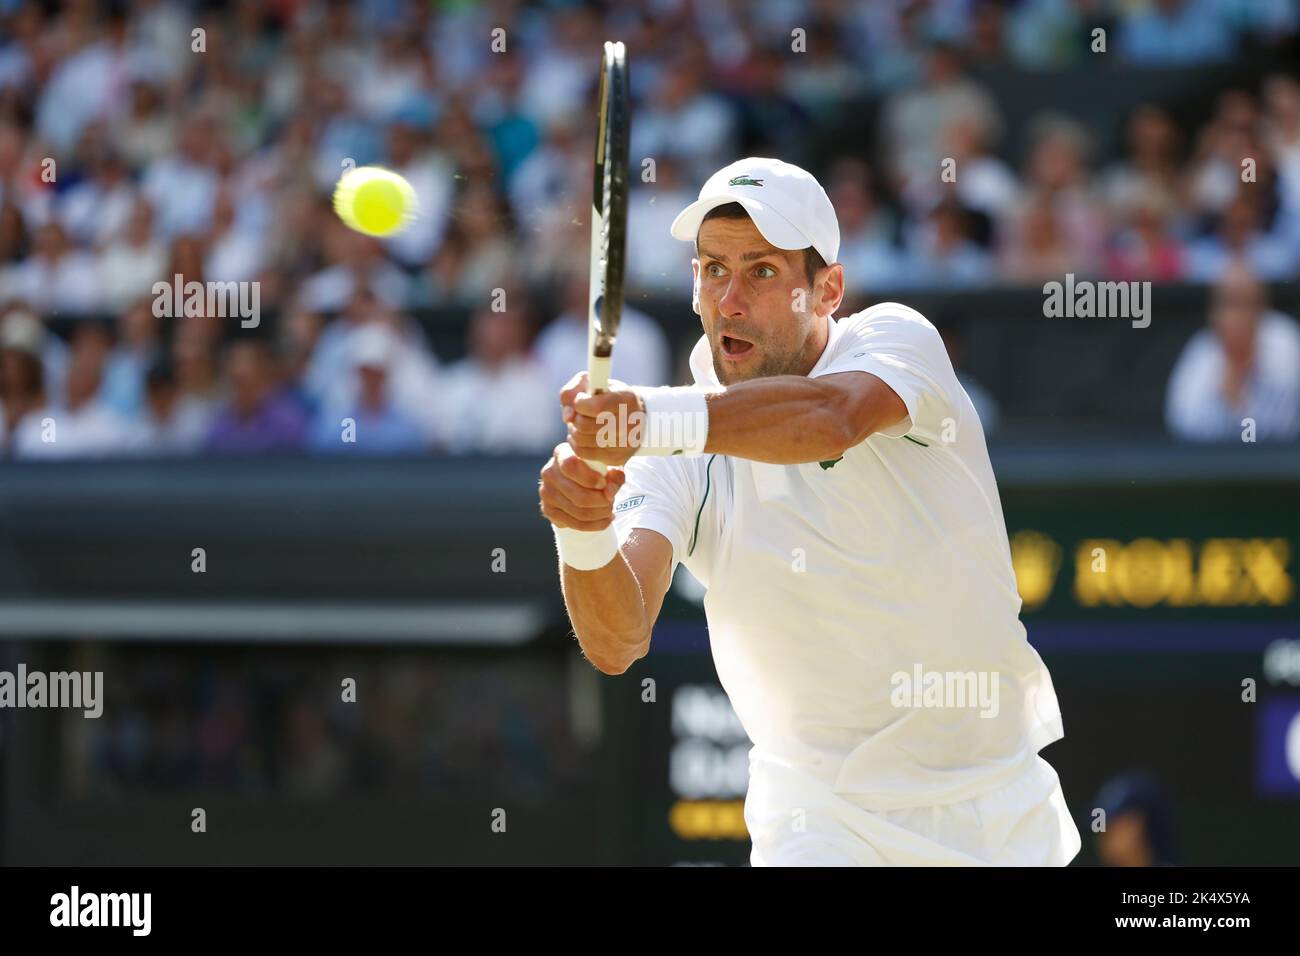 Serbian tennis player Novak Djokovic playing backhand shot during 202 Wimbledon Championships, London, England, United Kingdom Stock Photo